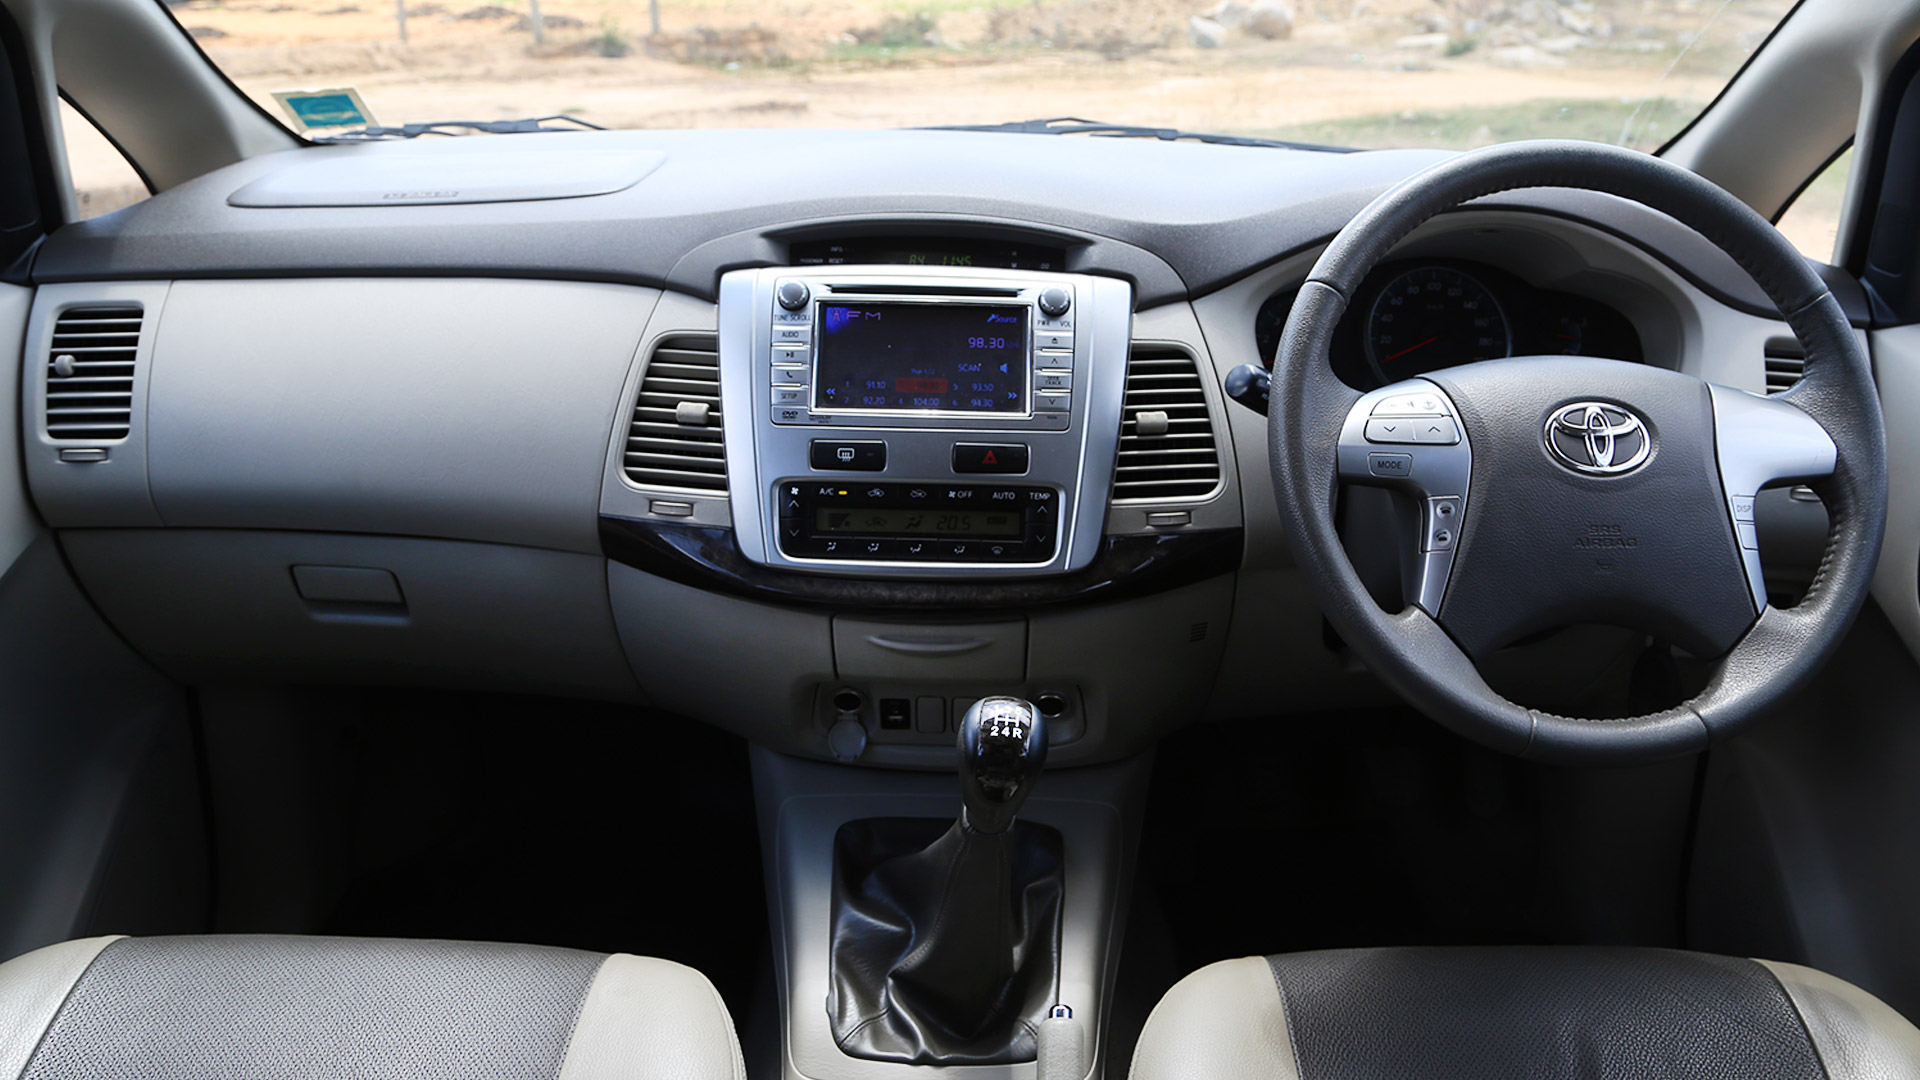 Toyota Innova 2015 2.5G 7 Seater Compare